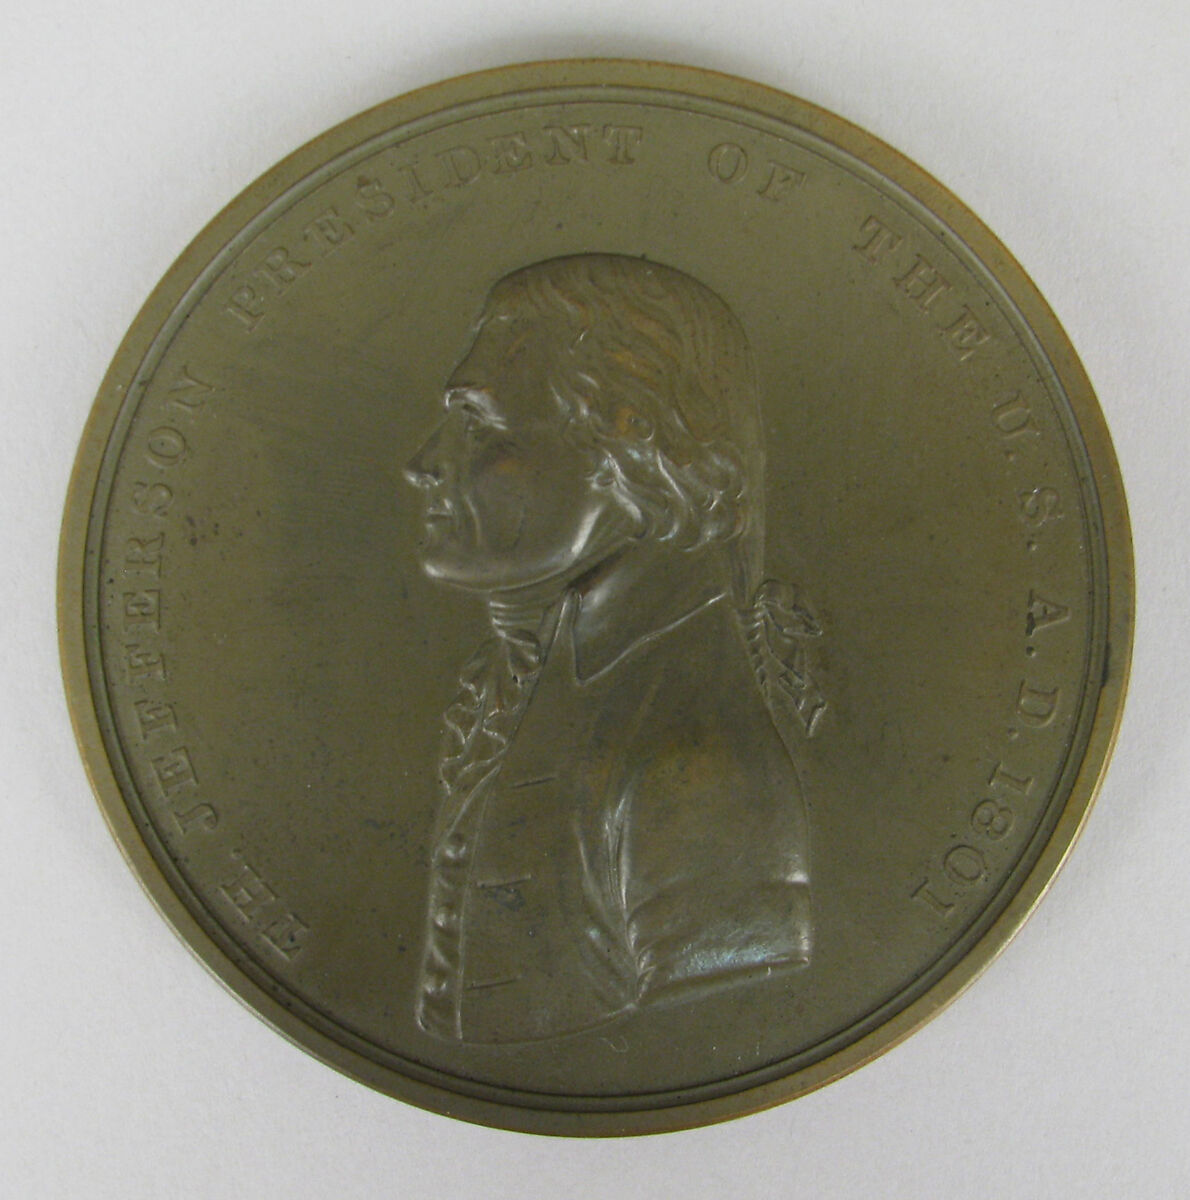 Inauguration Medal of Thomas Jefferson, Third President of the United States, 1801, Johann Mathias Reich (American (born Germany), Fürth, Bavaria 1768–1833 Albany, New York), Bronze, struck (probably a restrike), American 